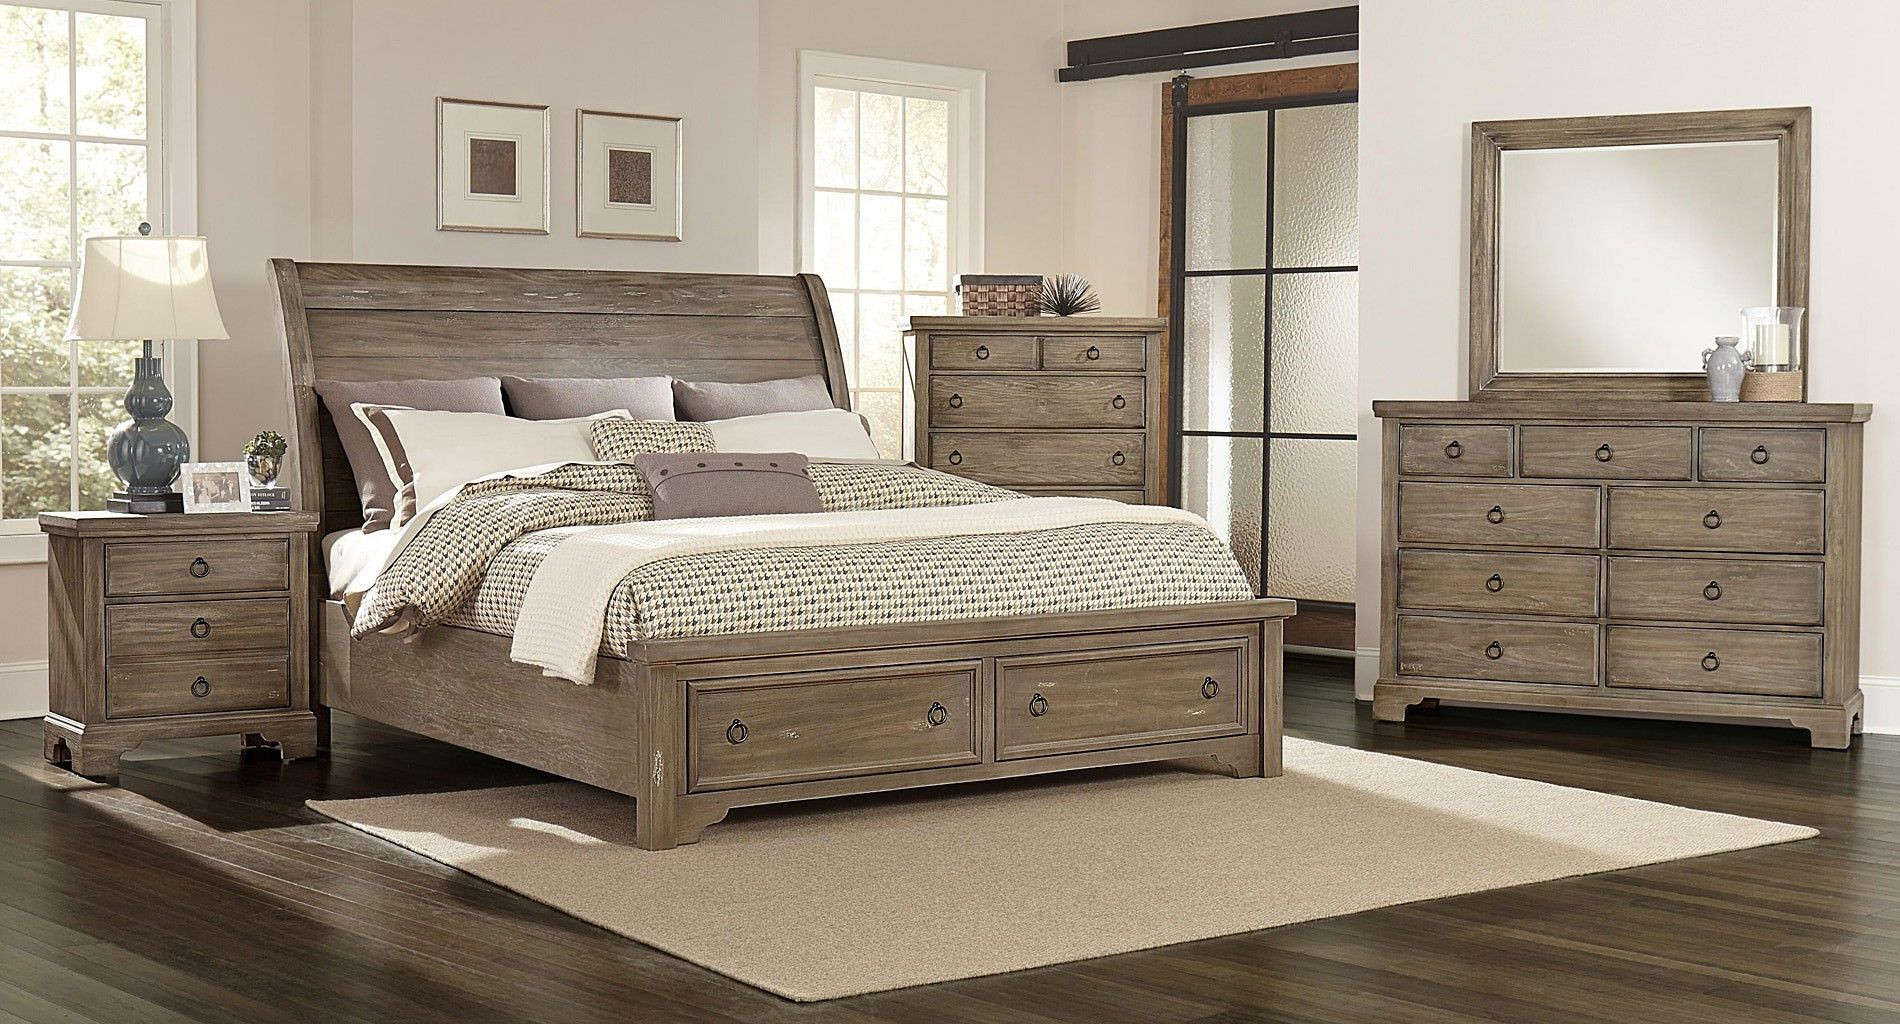 Cheap Rustic Bedroom Furniture Sets
 Whiskey Barrel Storage Bedroom Set Rustic Gray